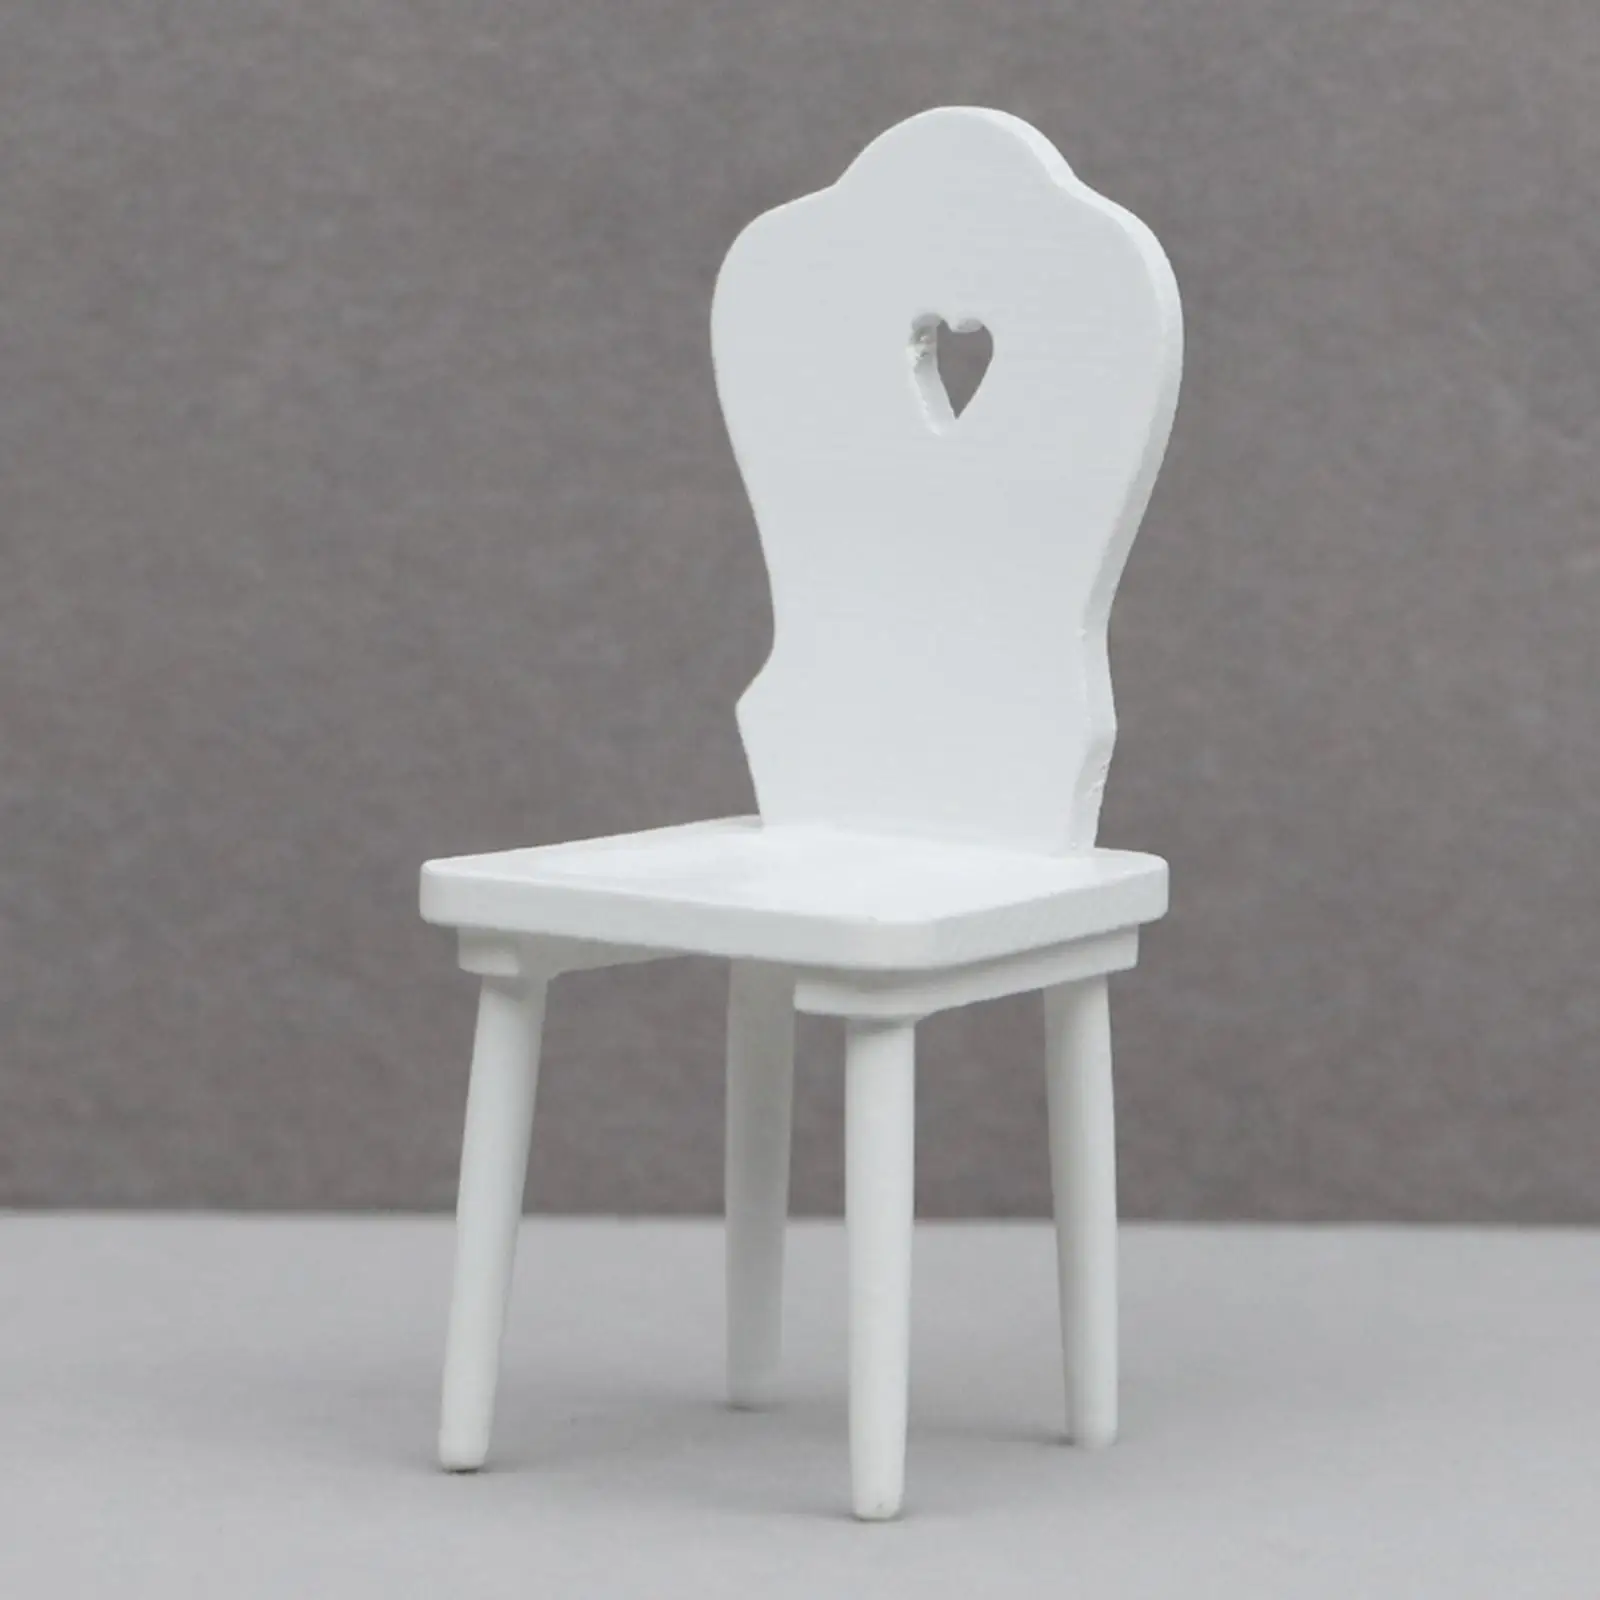 1:12 Dollhouse Miniature Chair DIY Scene Accessories Photo Props Simulation Dollhouse Mini Chair for Living Room Decor